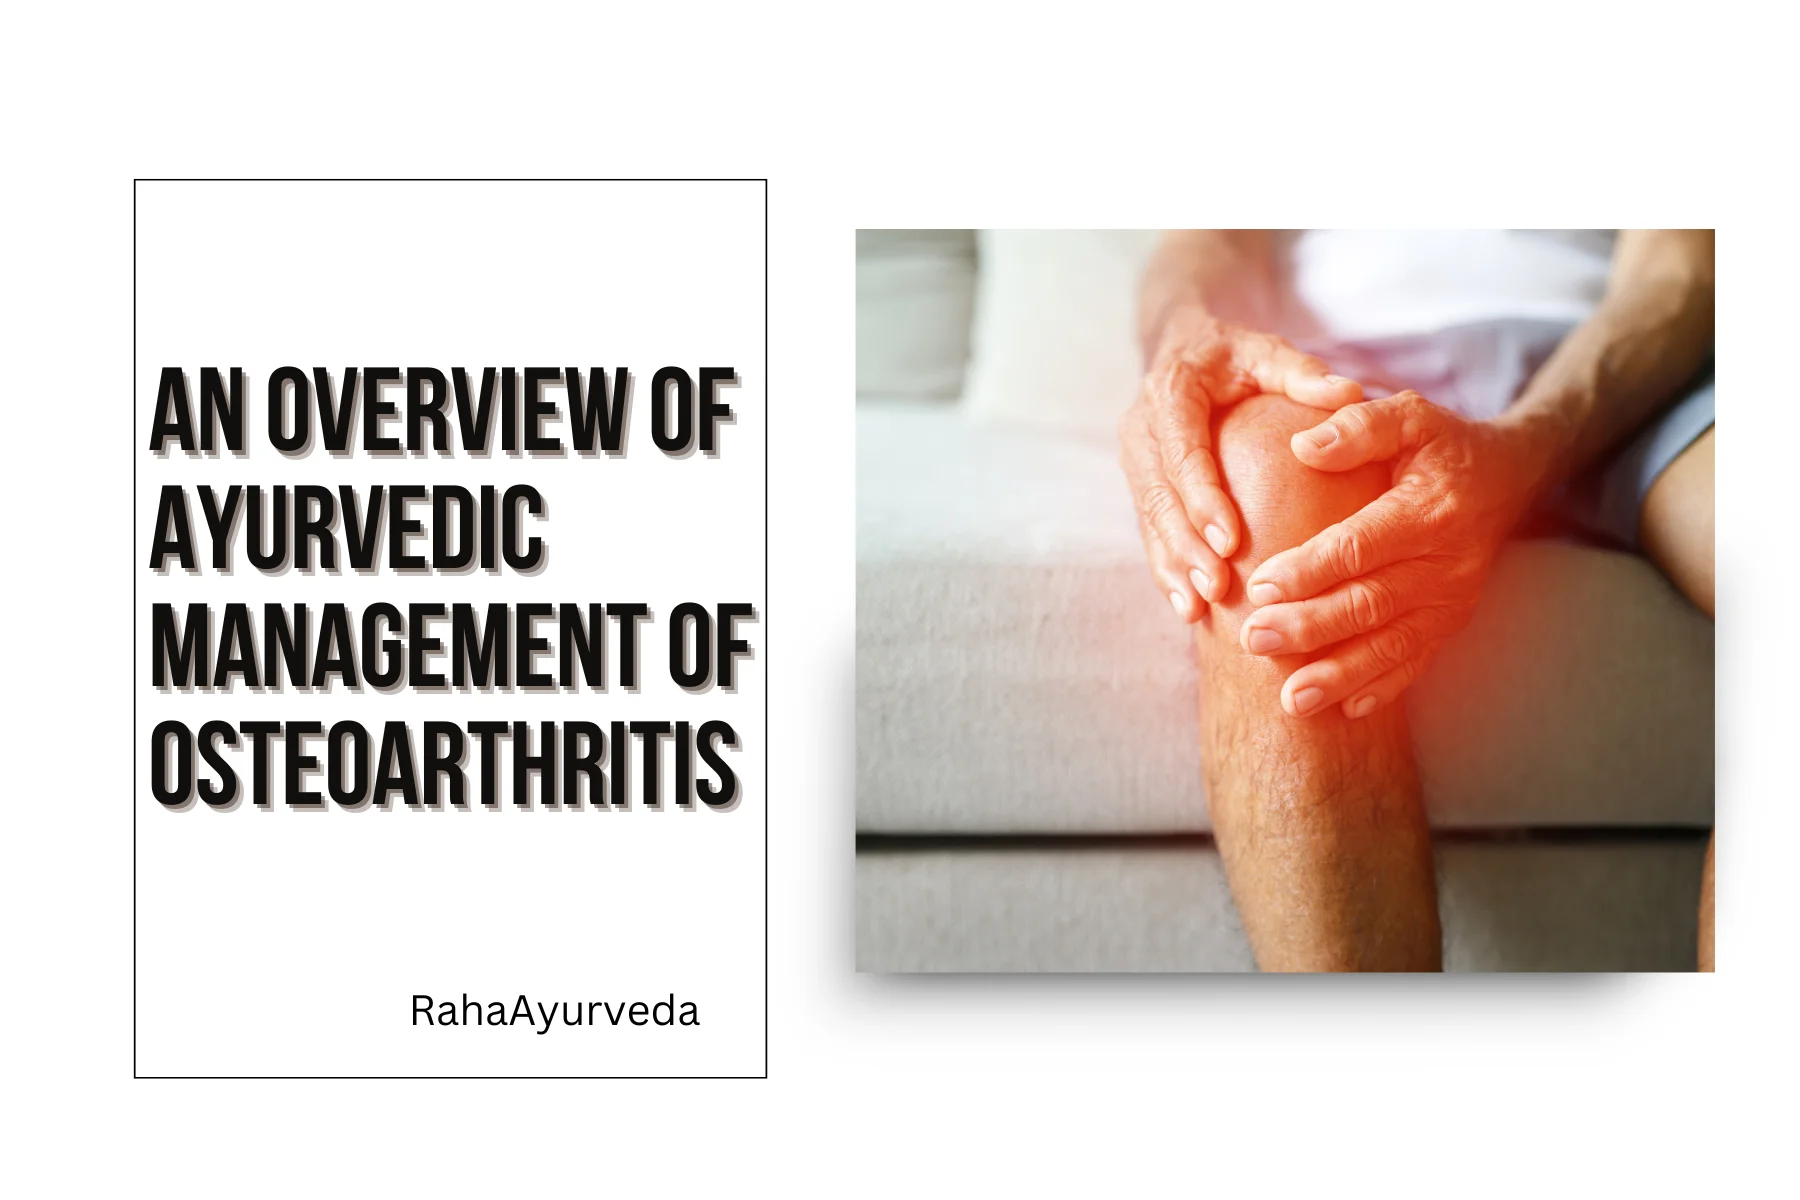 An Overview of Ayurvedic Management of Osteoarthritis